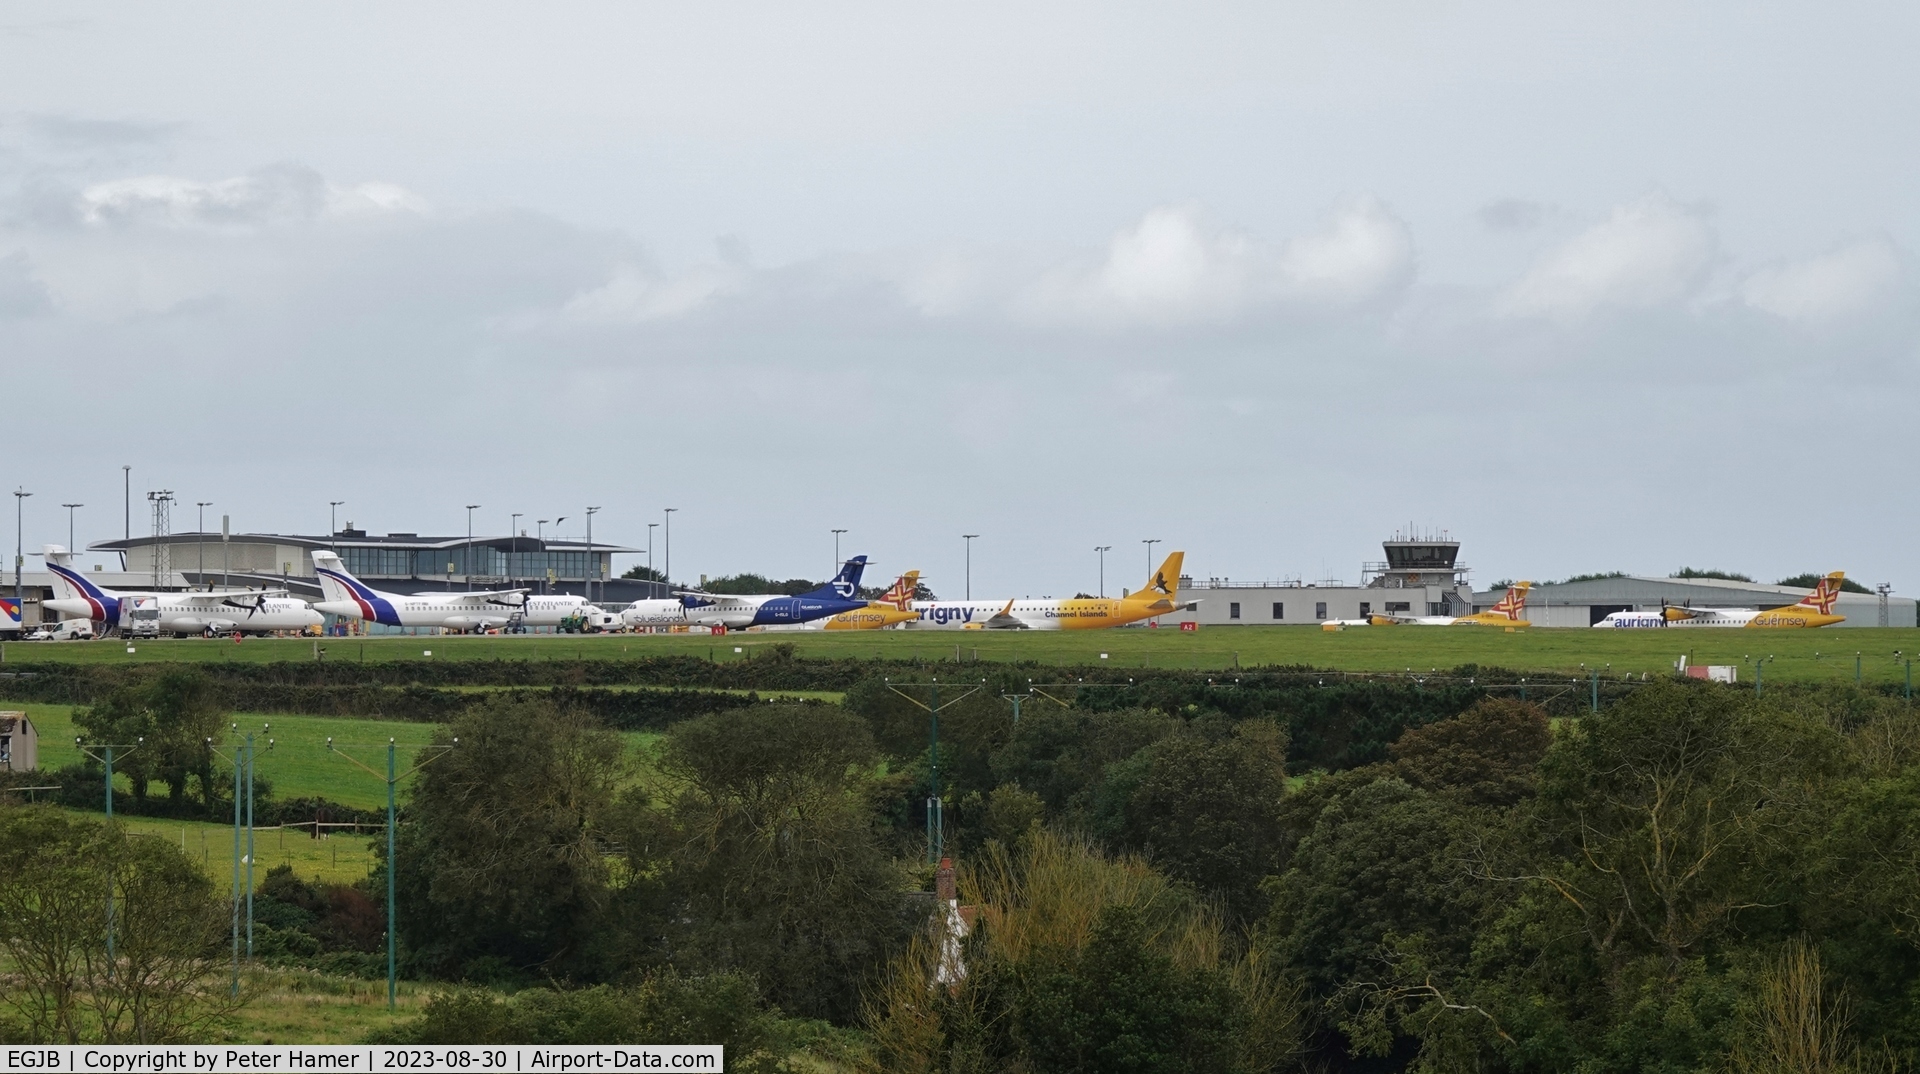 Guernsey Airport, Guernsey, Channel Islands United Kingdom (EGJB) - Guernsey Airport